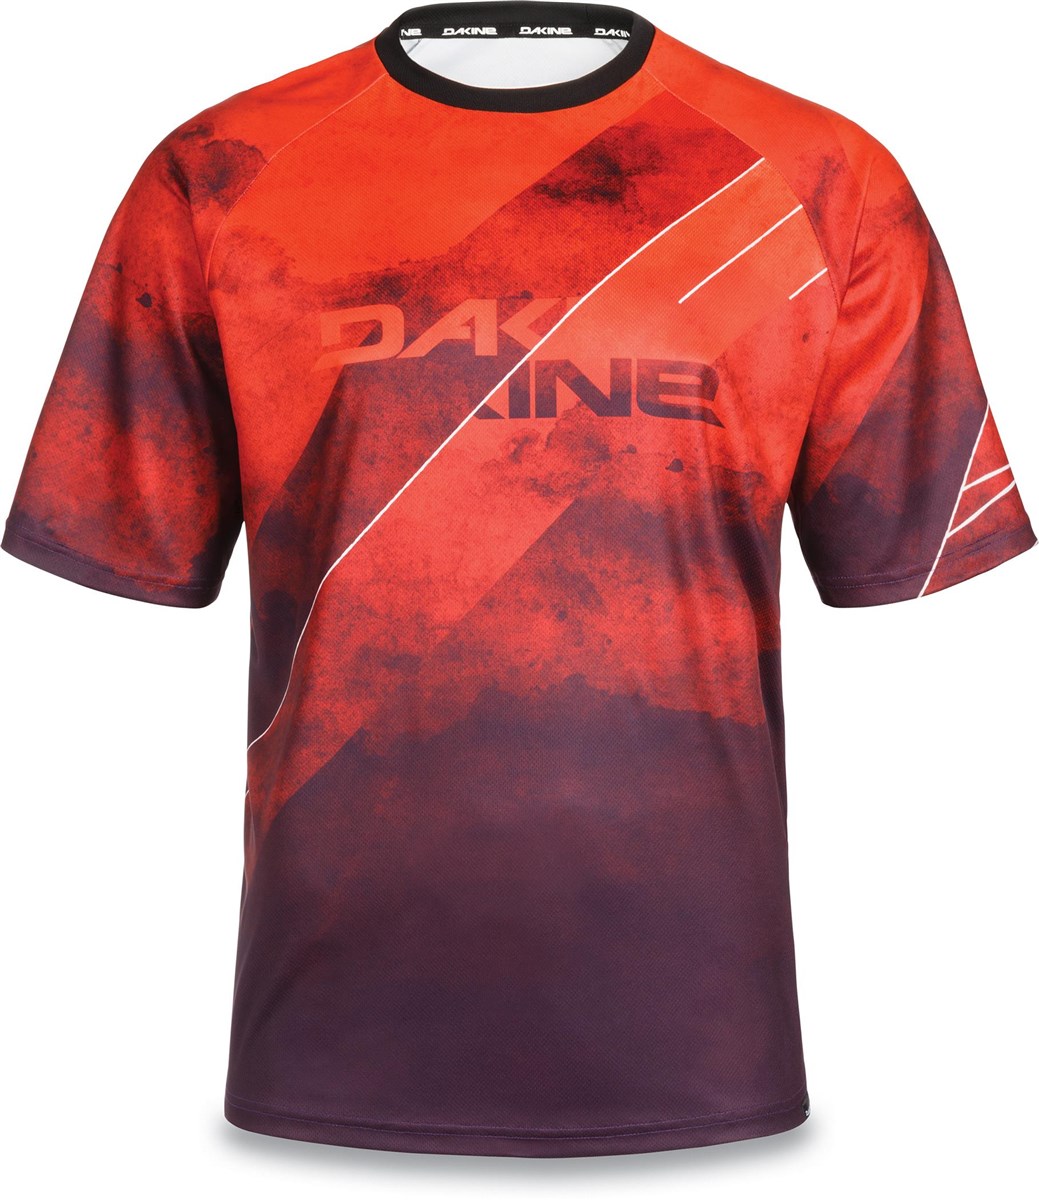 Dakine Thrillium Short Sleeve Jersey 2017 product image